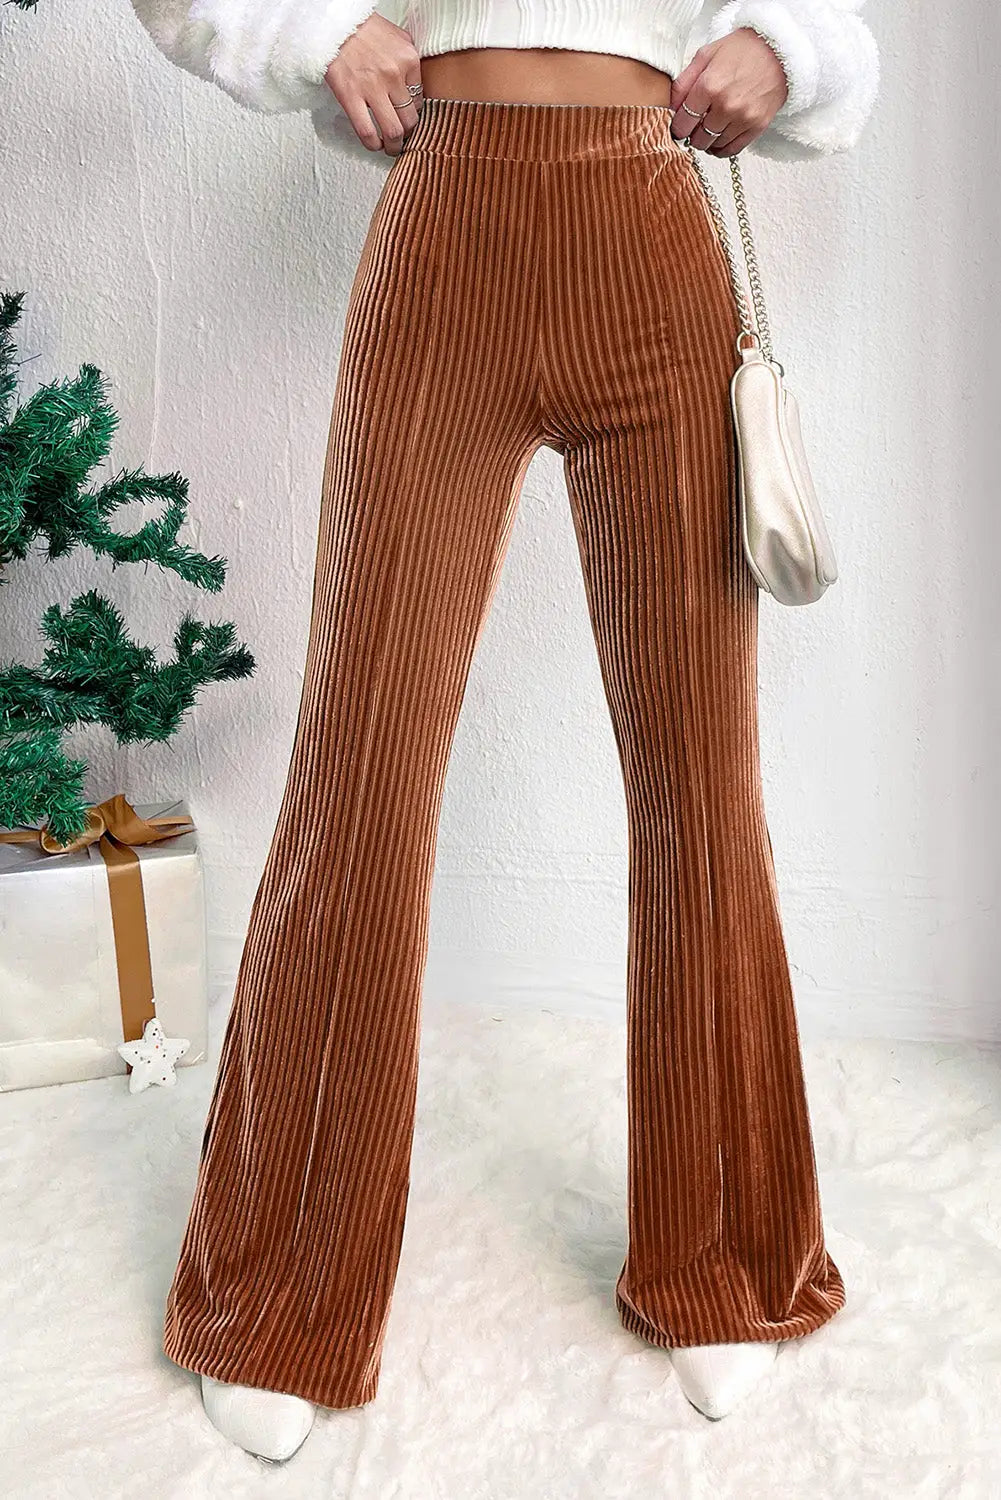 Chestnut solid color high waist flare corduroy pants - s / 90% polyester + 10% elastane - wide leg